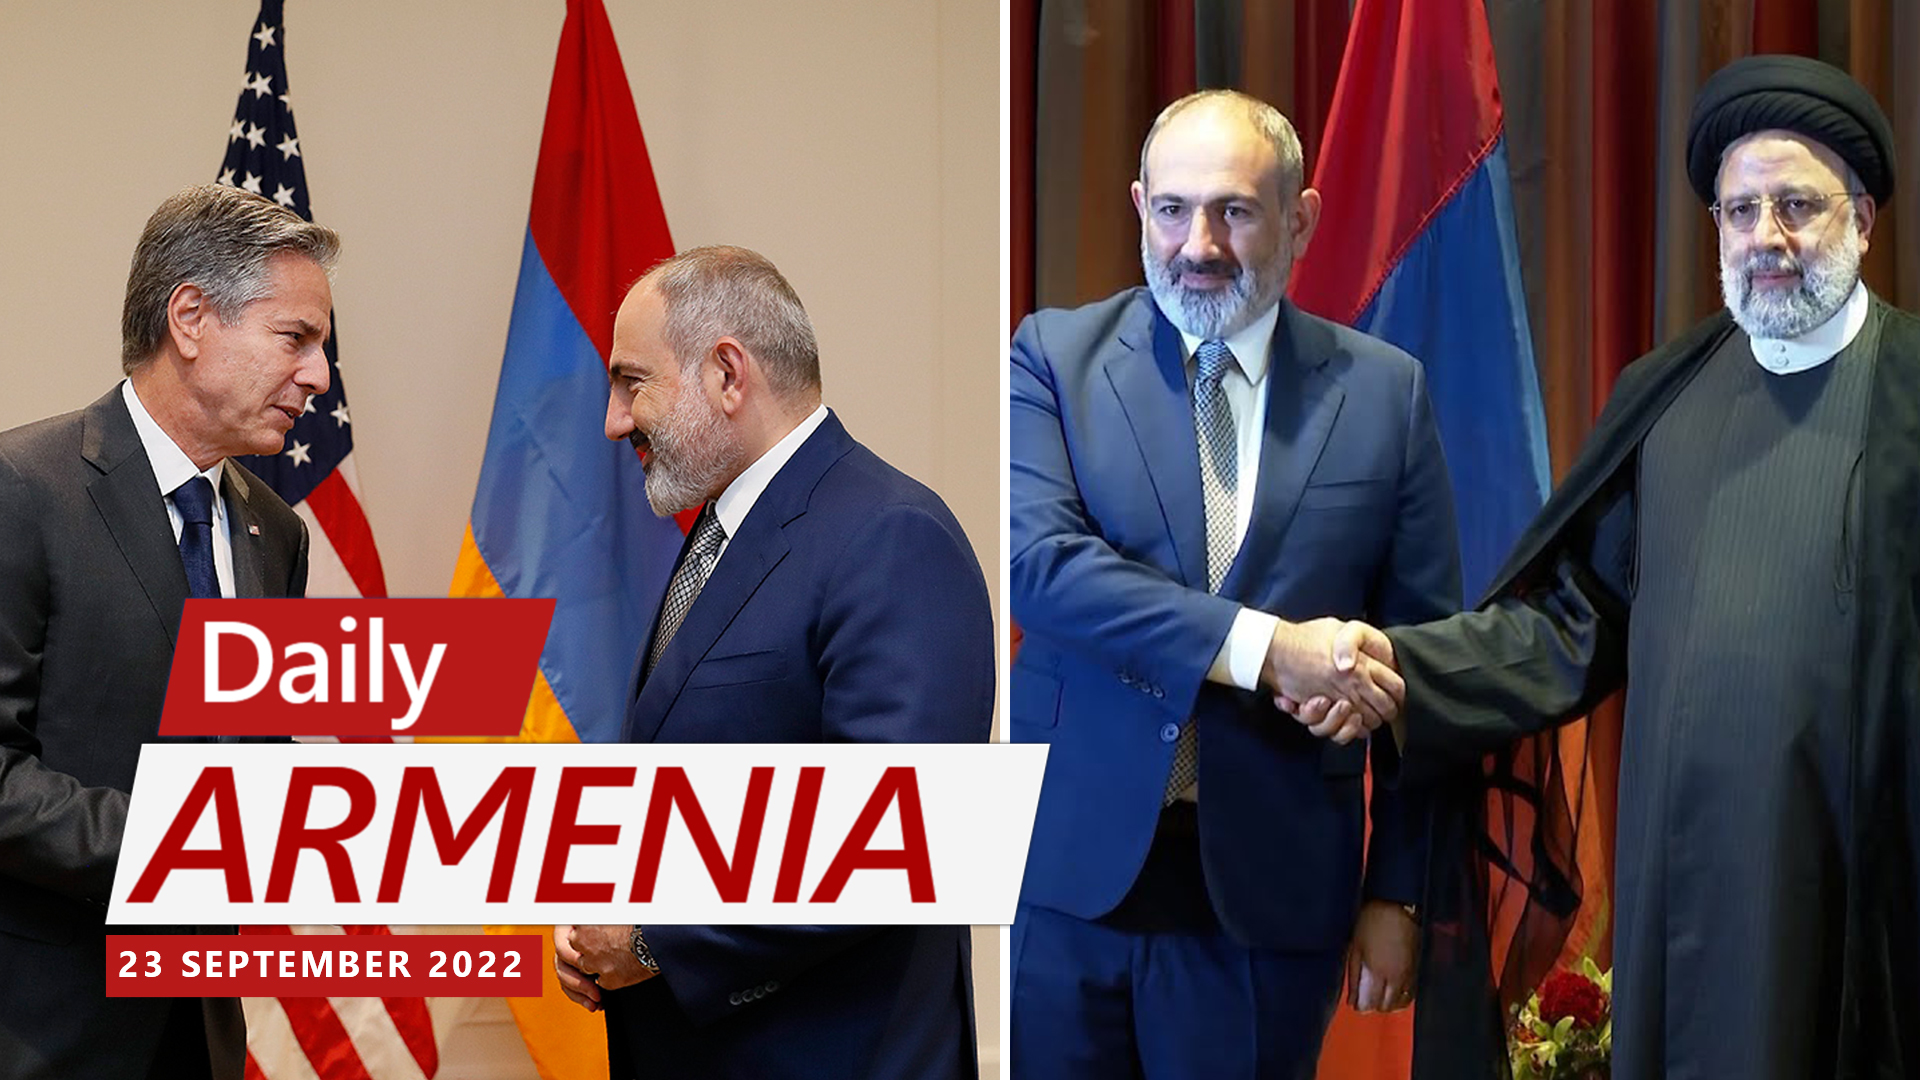 Armenian PM meets Blinken, NATO head, Iranian president at UN